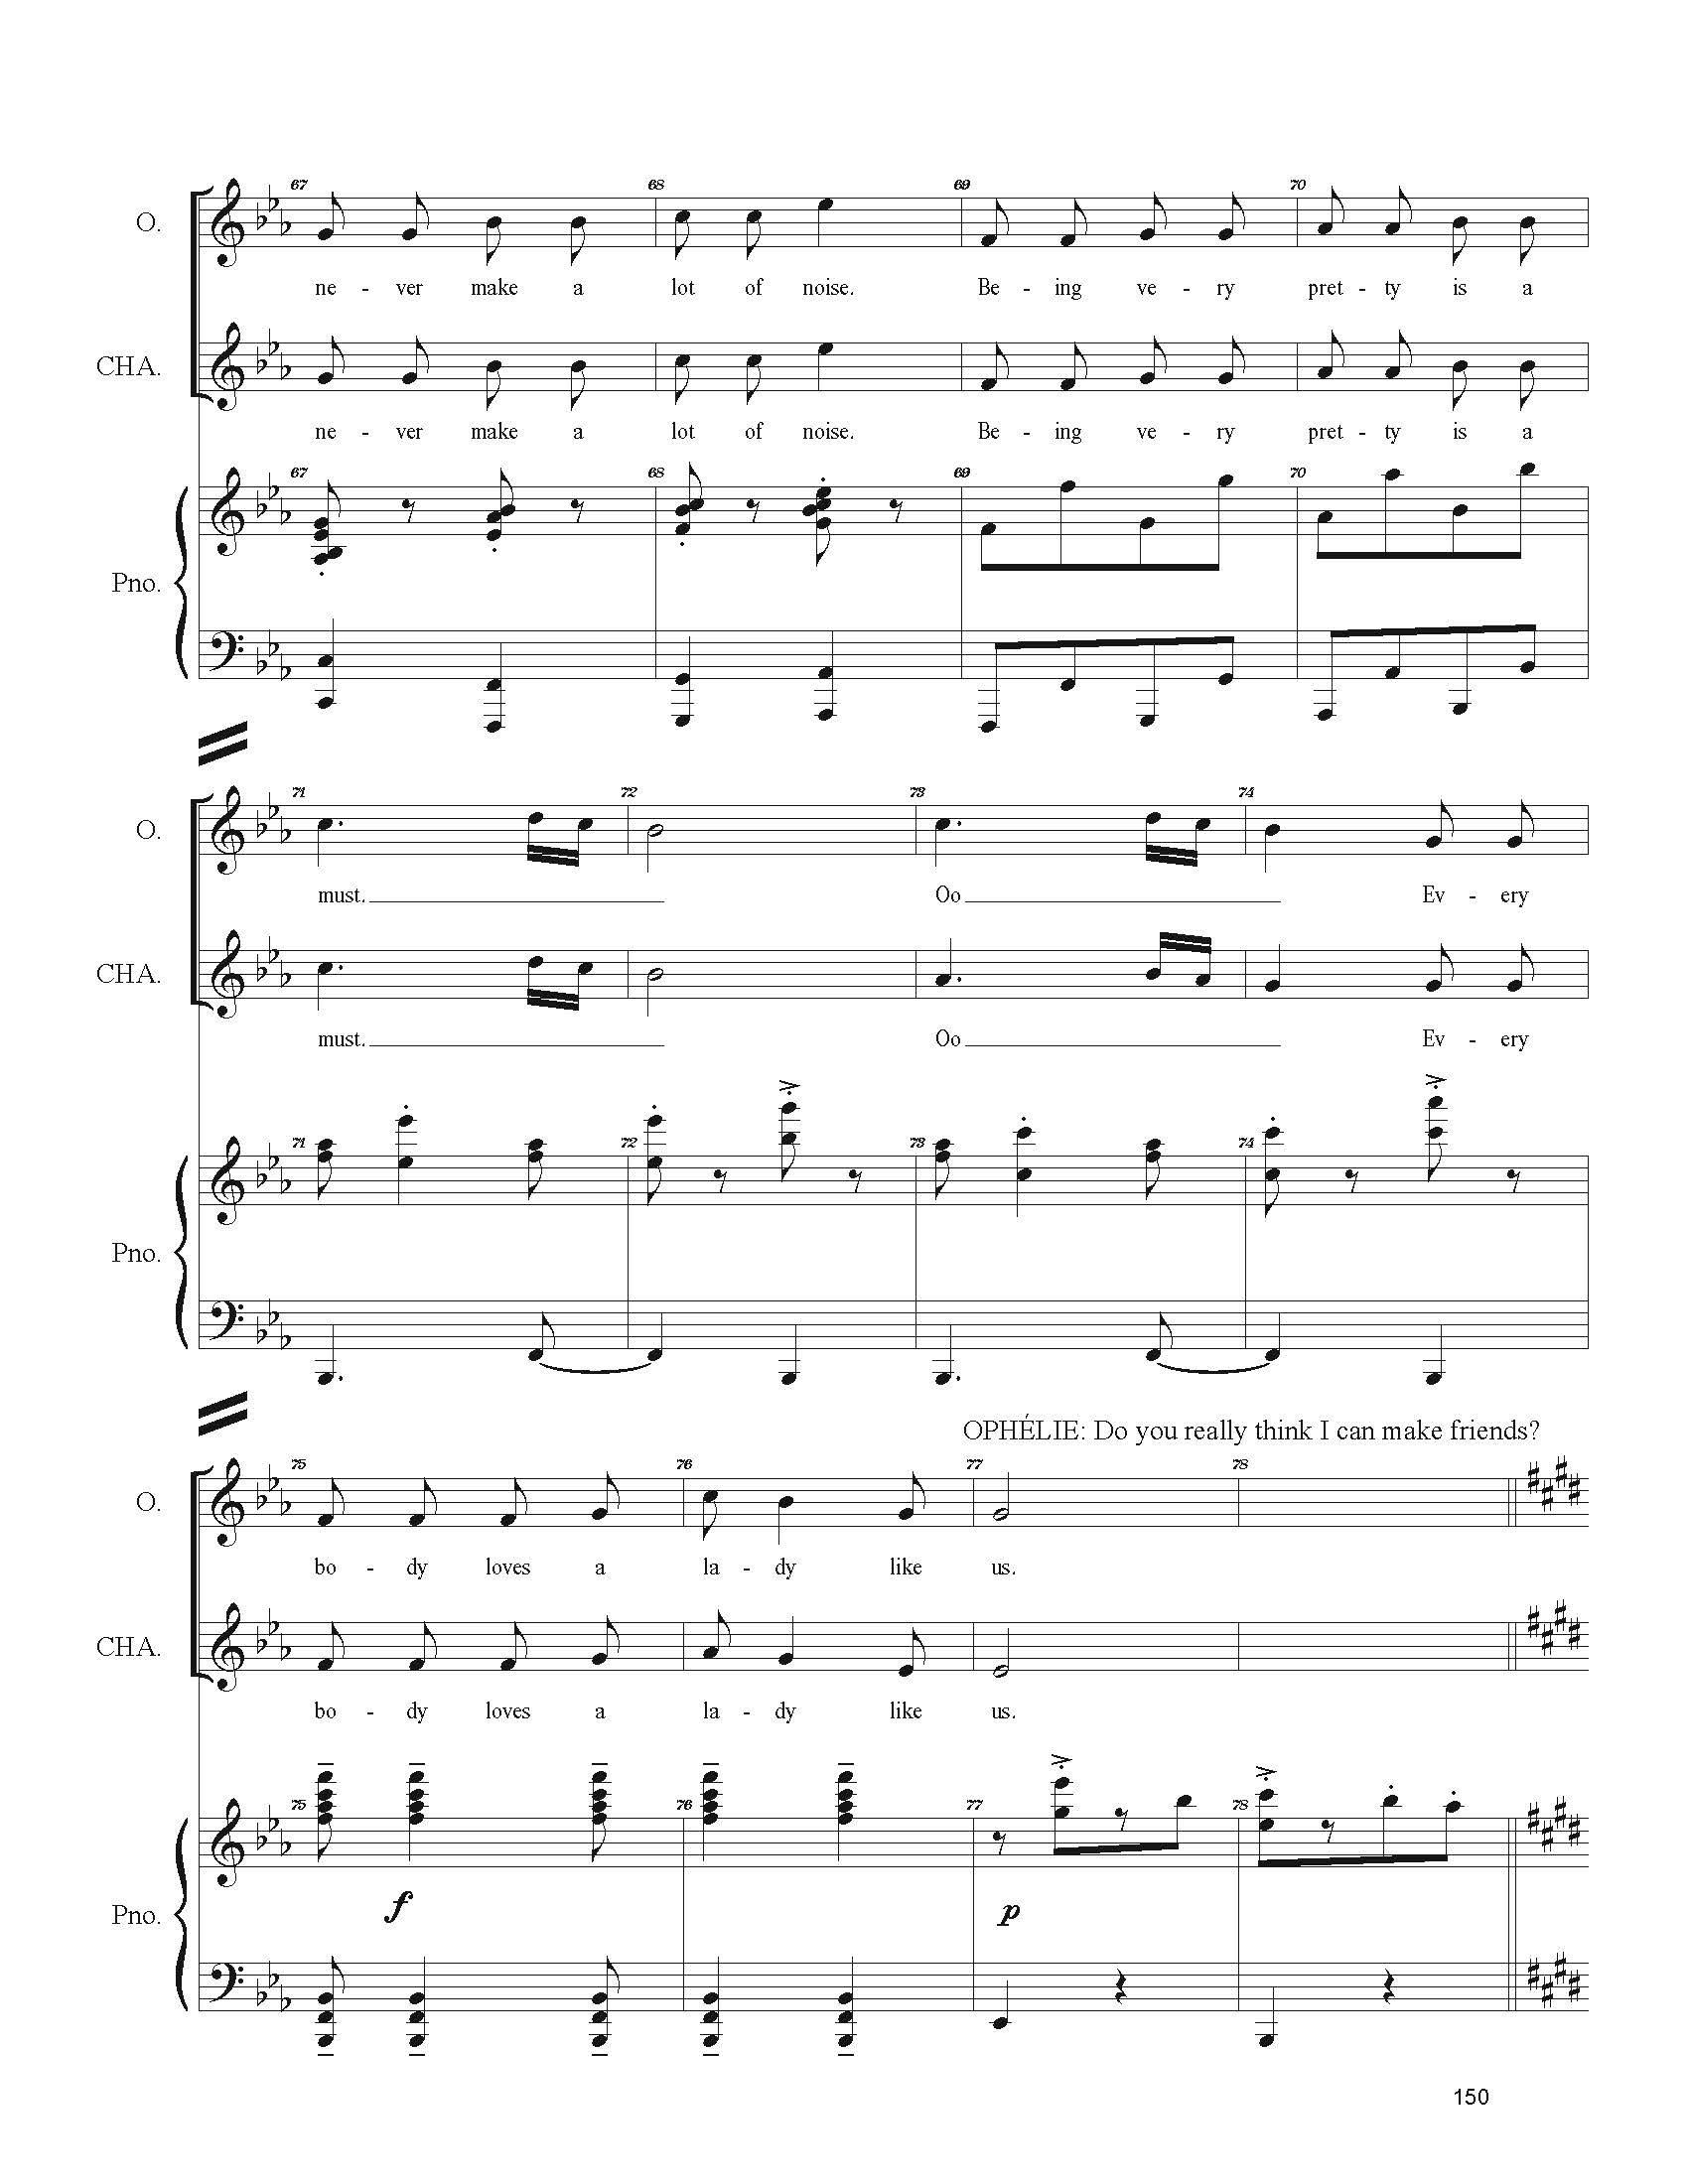 FULL PIANO VOCAL SCORE DRAFT 1 - Score_Page_150.jpg